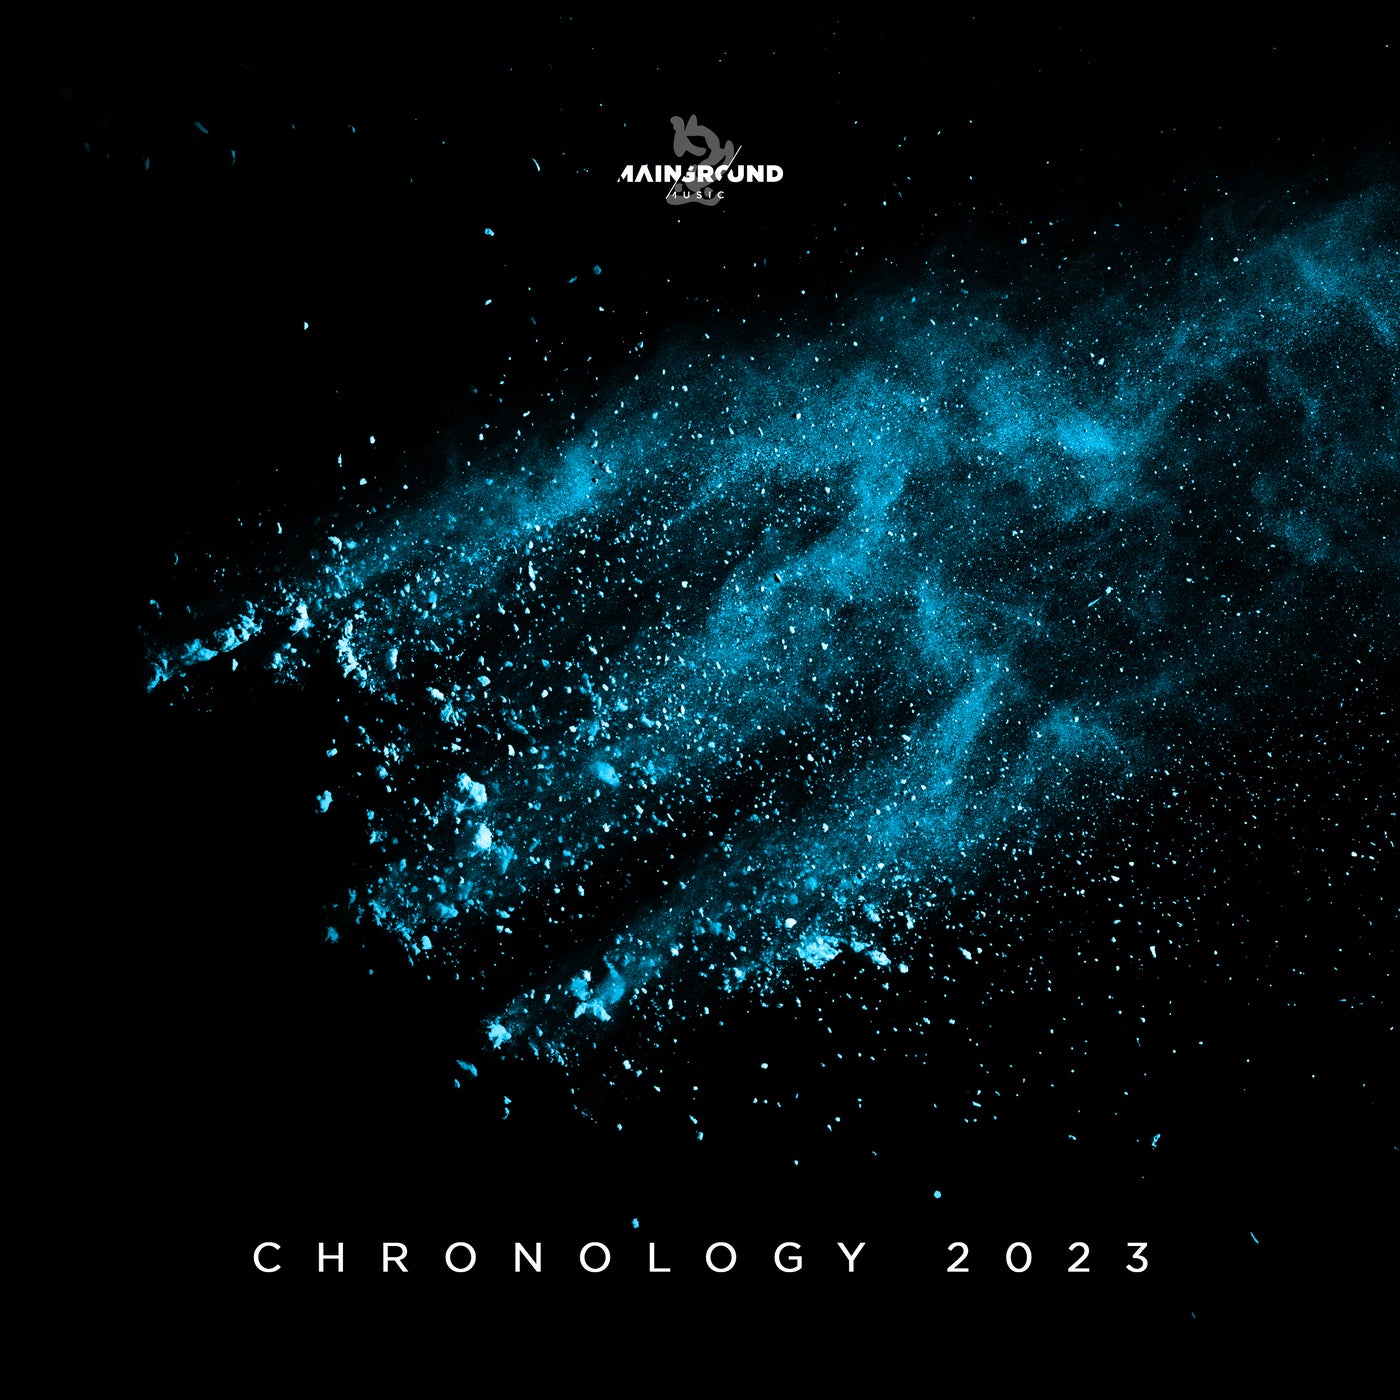 Chronology 2023